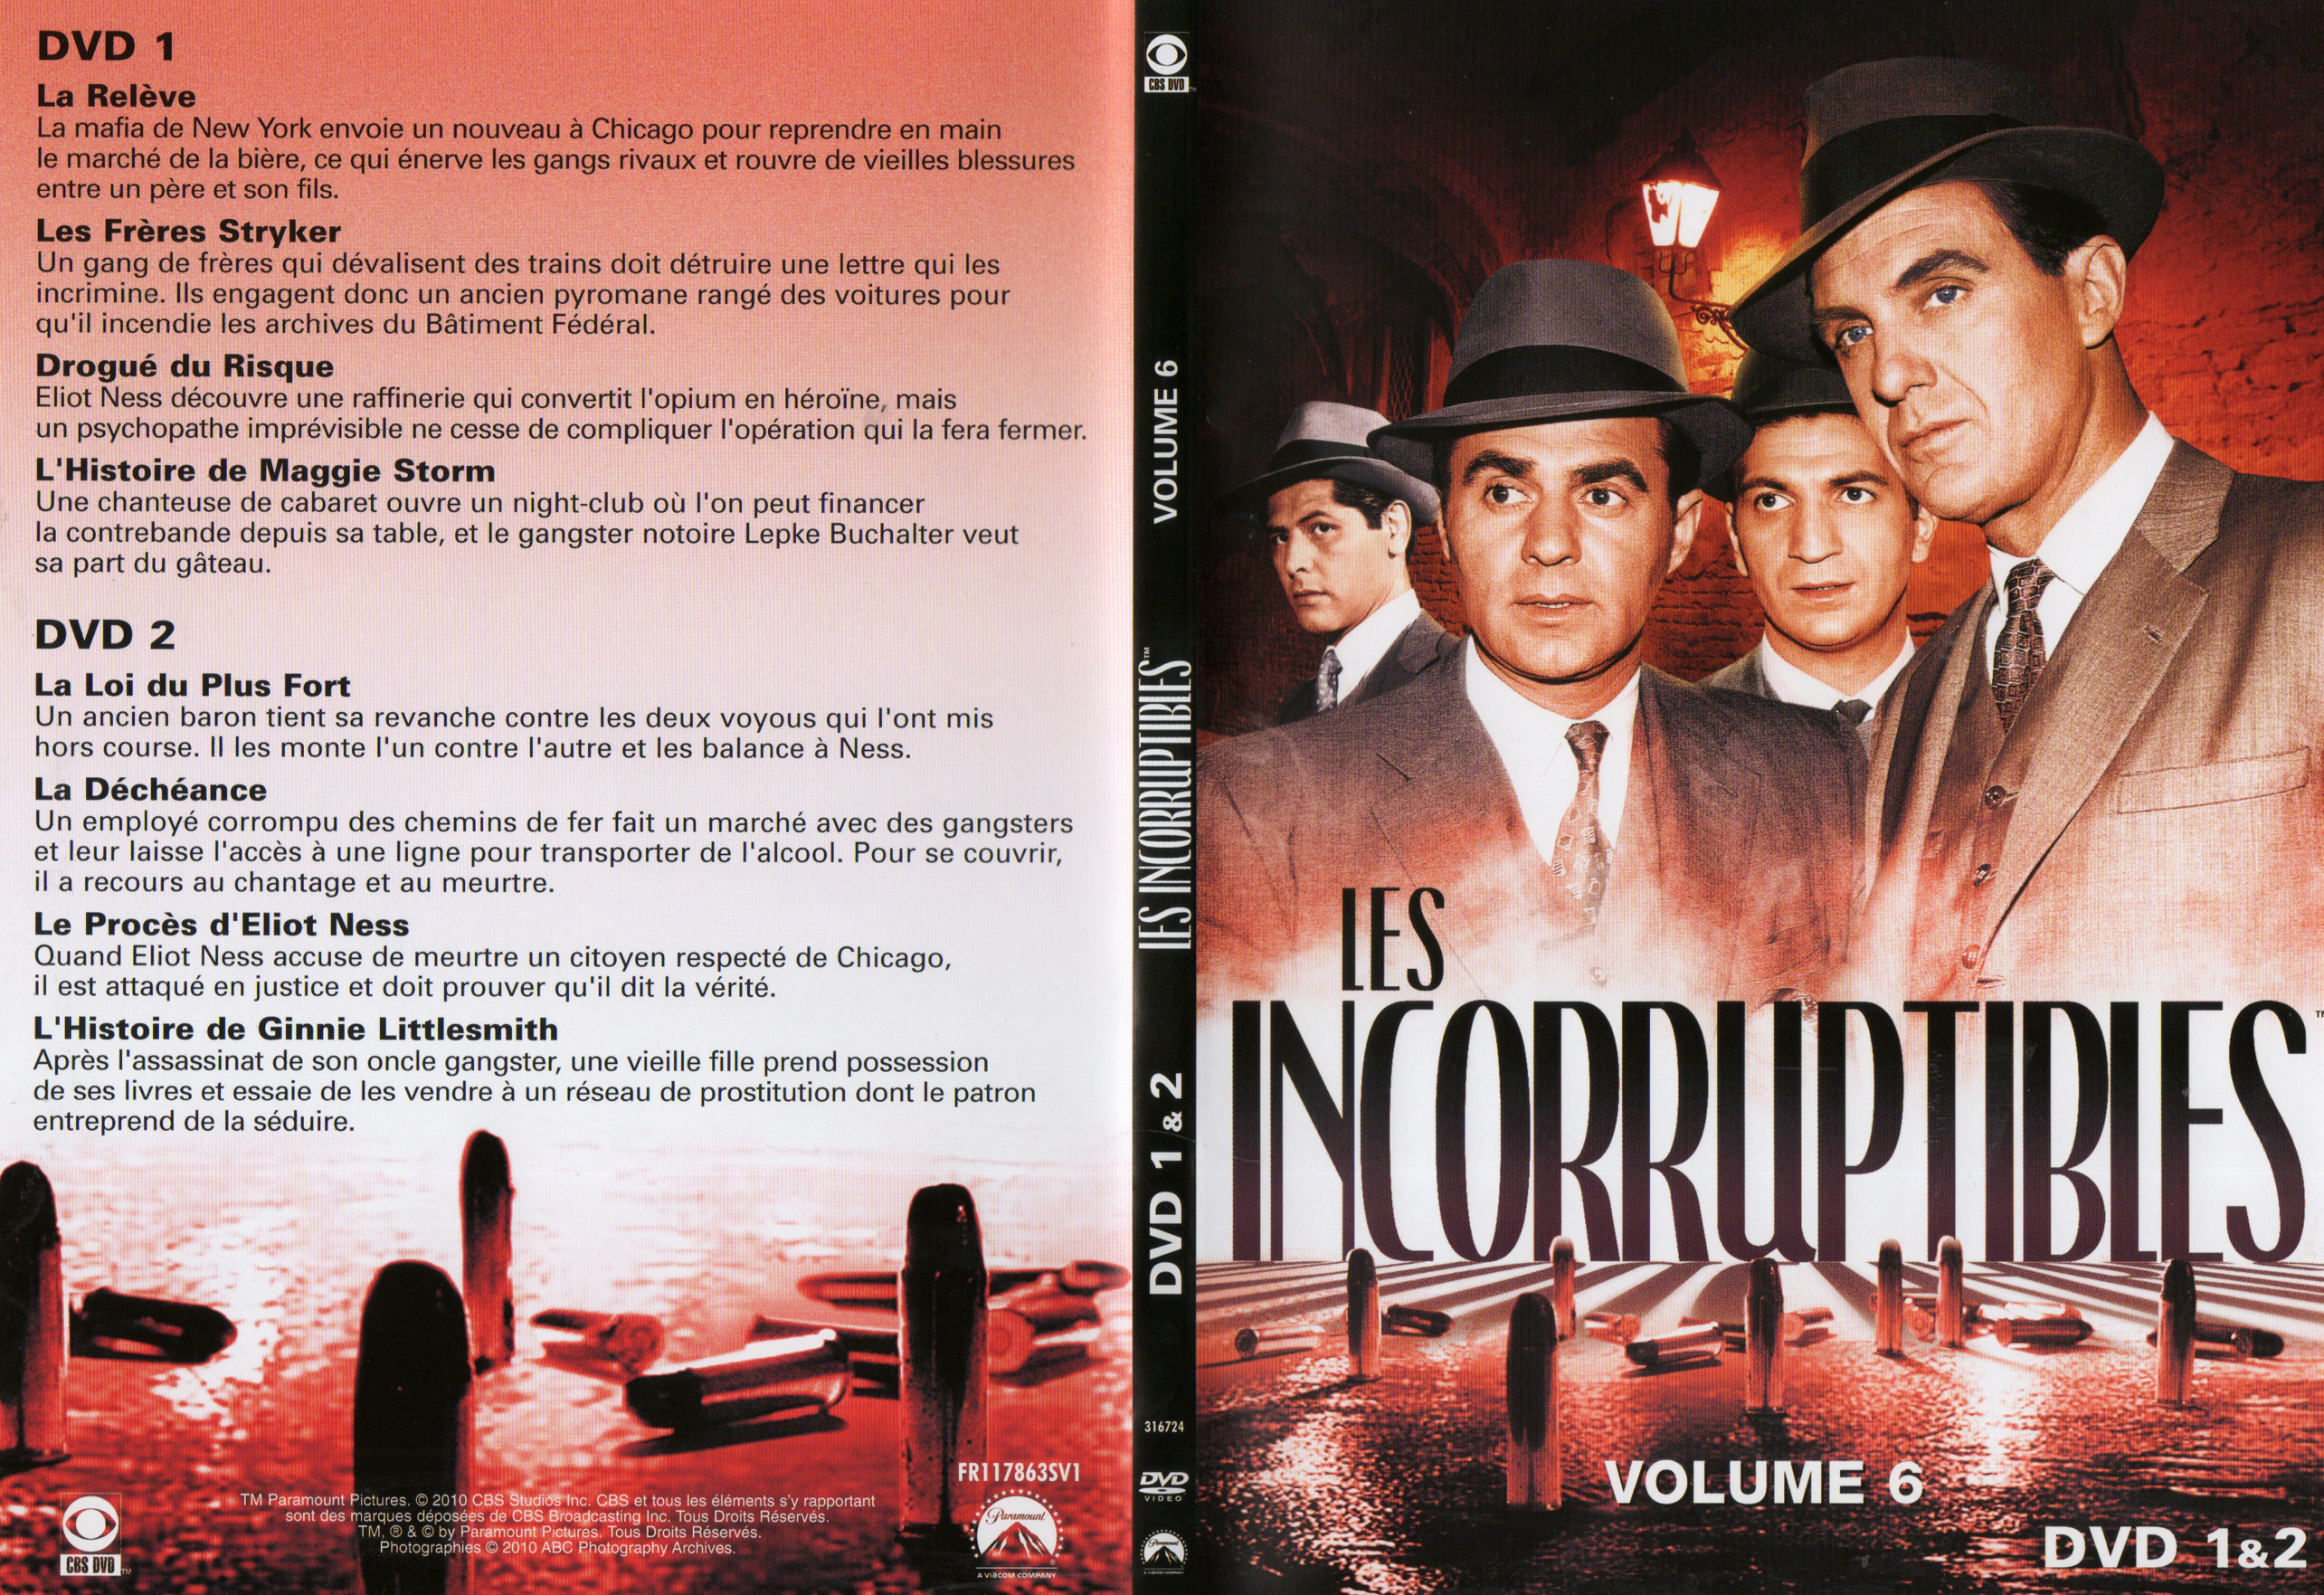 Jaquette DVD Les incorruptibles vol 06 DVD 1